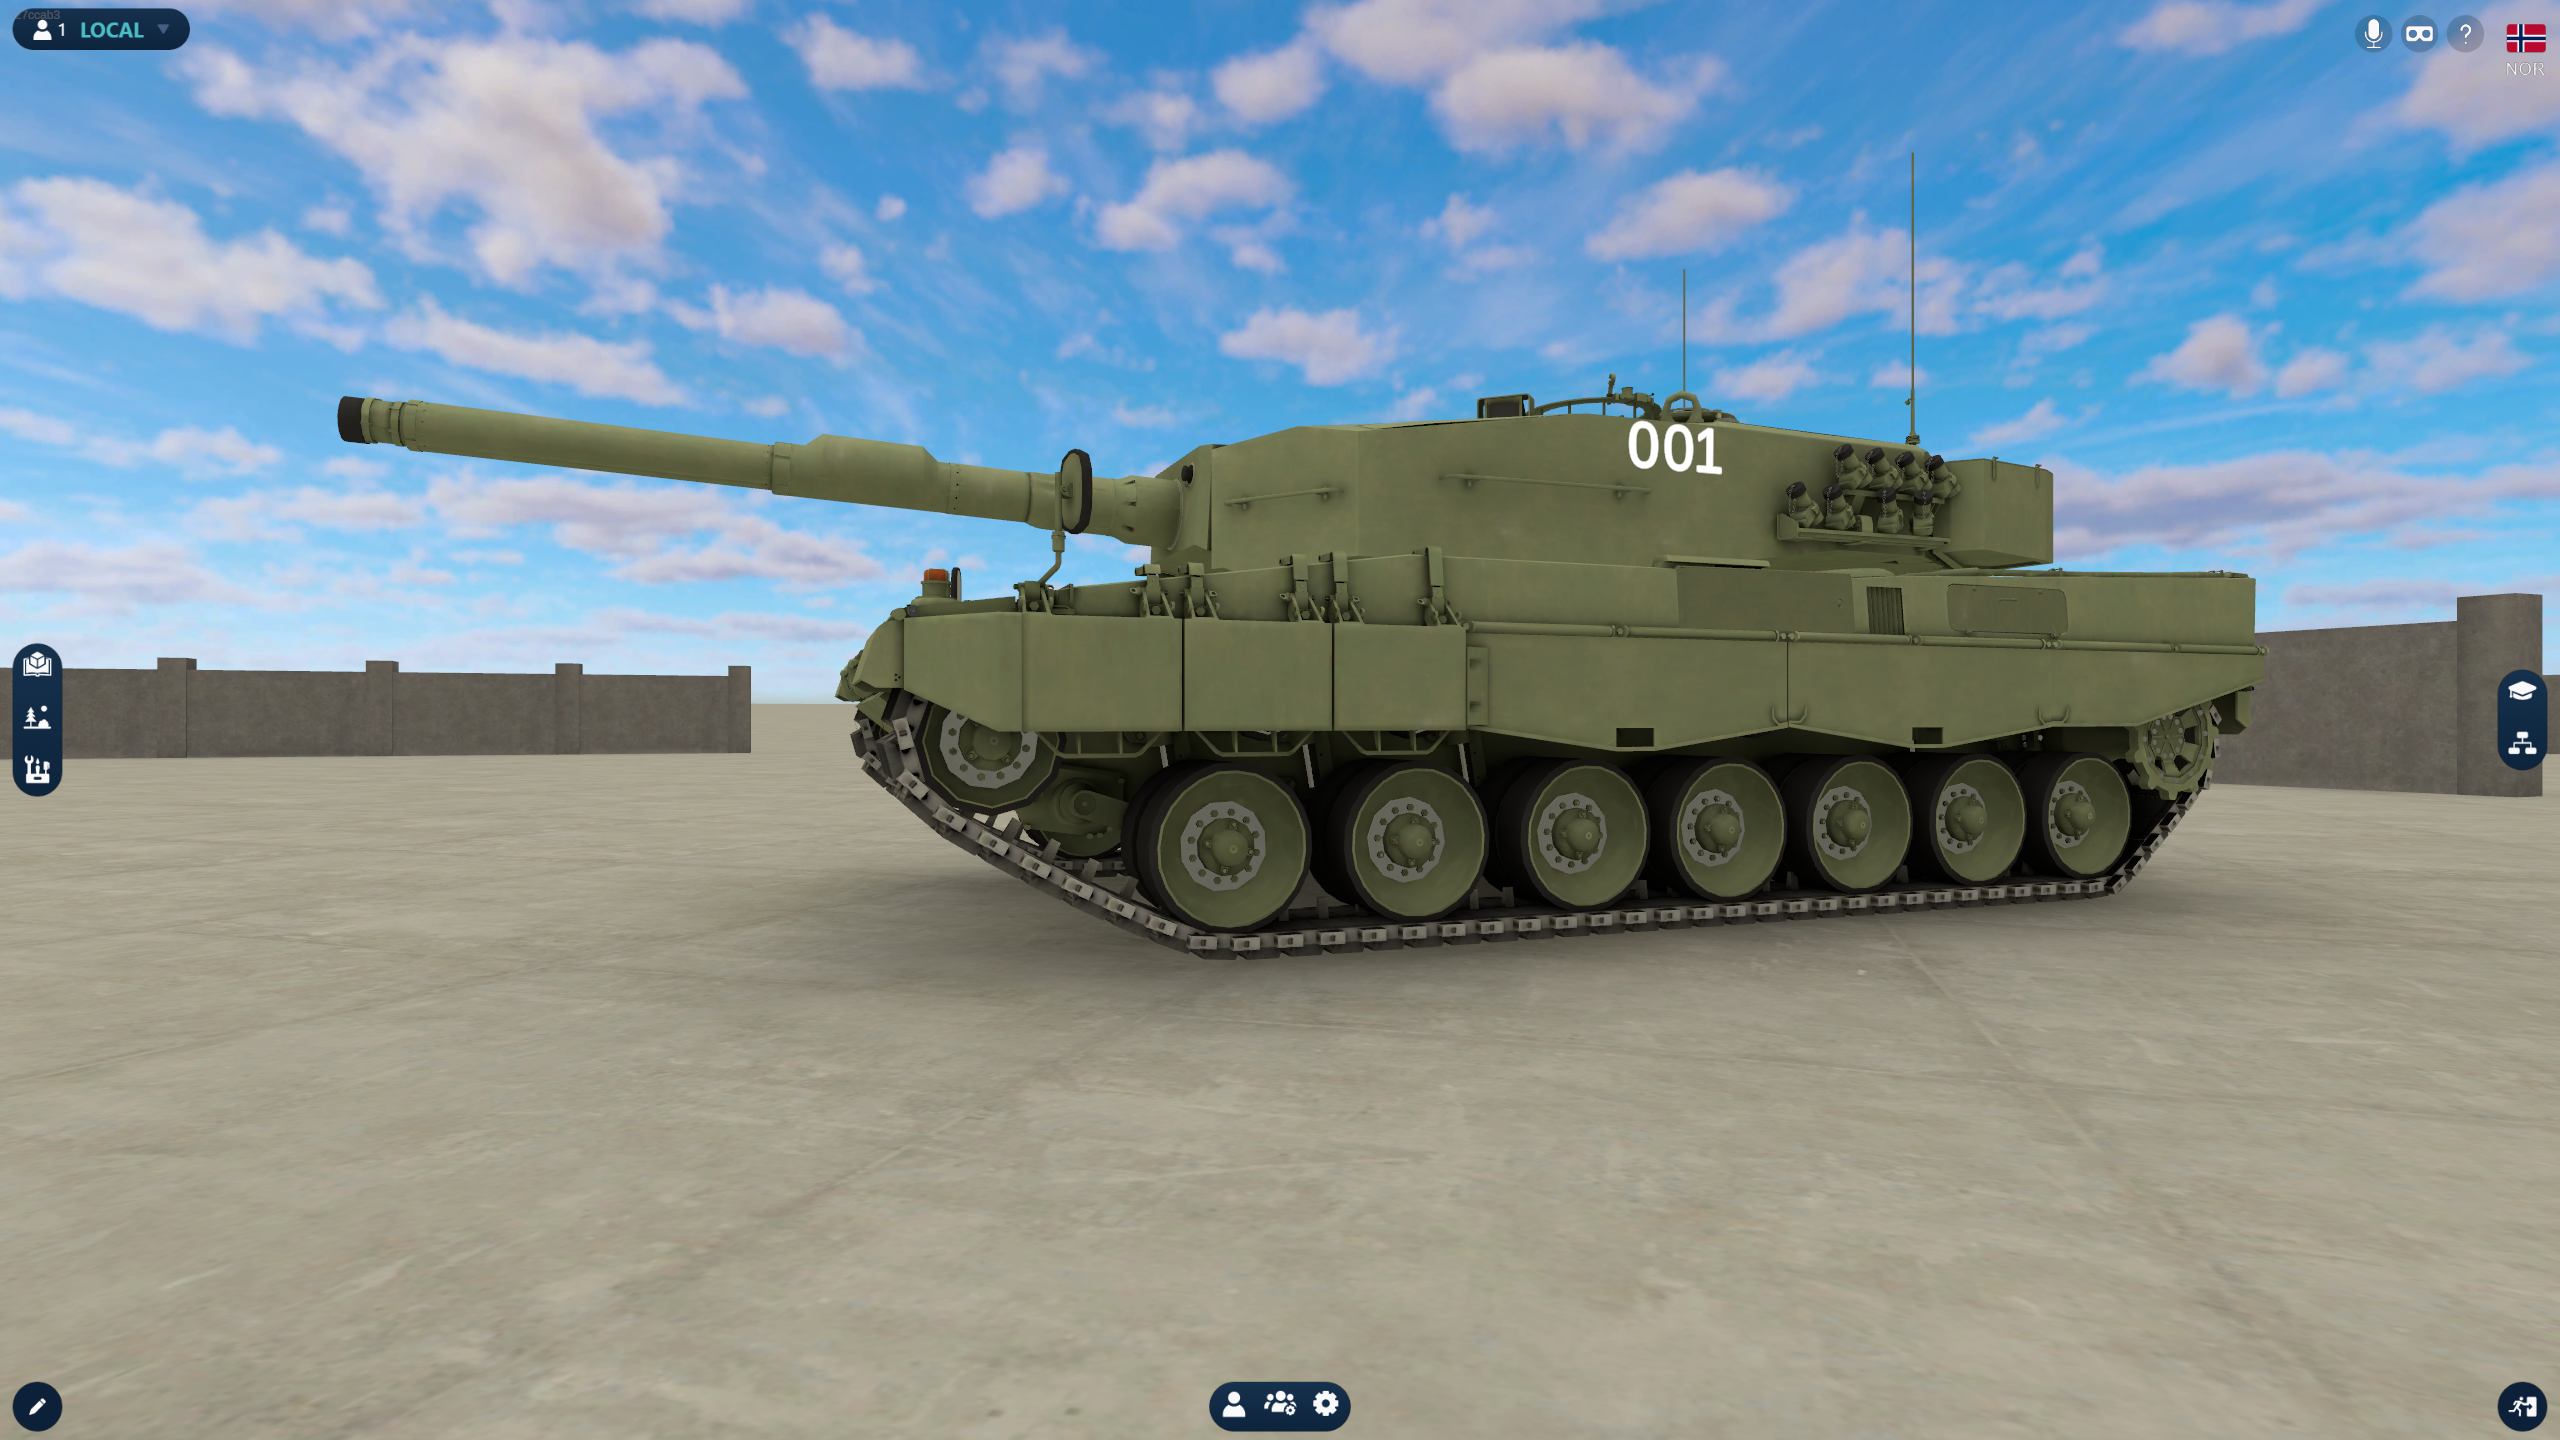 Digital twin of the Leopard 2A4